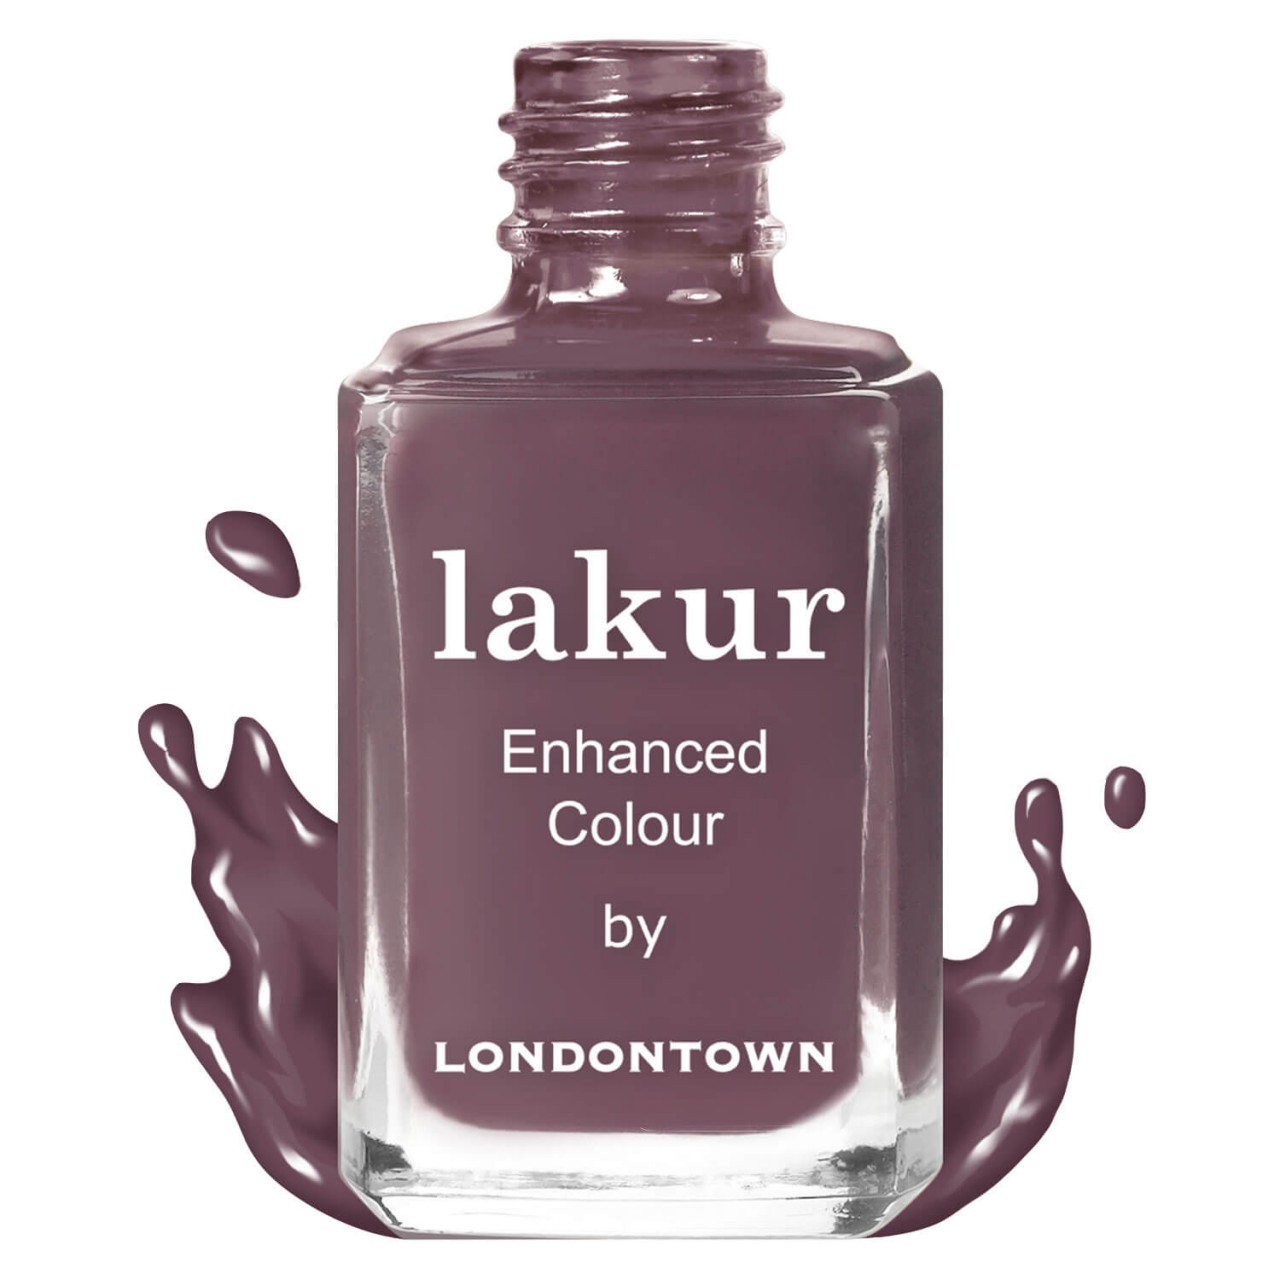 lakur - Save the Queen von Londontown